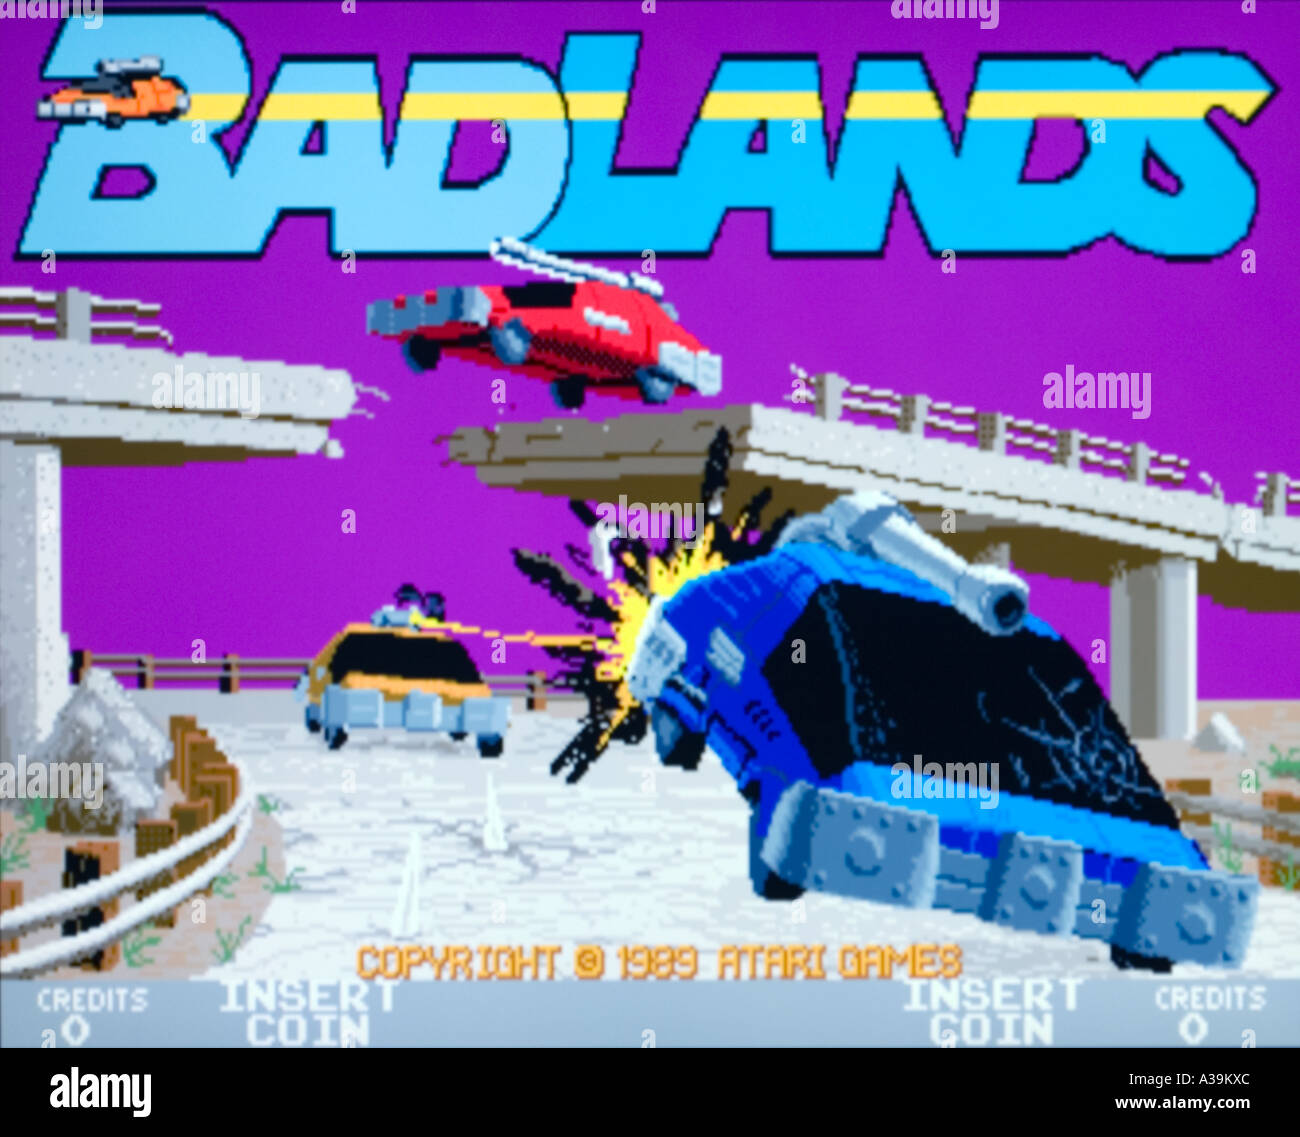 Badlands Atari Games 1989 vintage arcade videogame screenshot - EDITORIAL USE ONLY Stock Photo